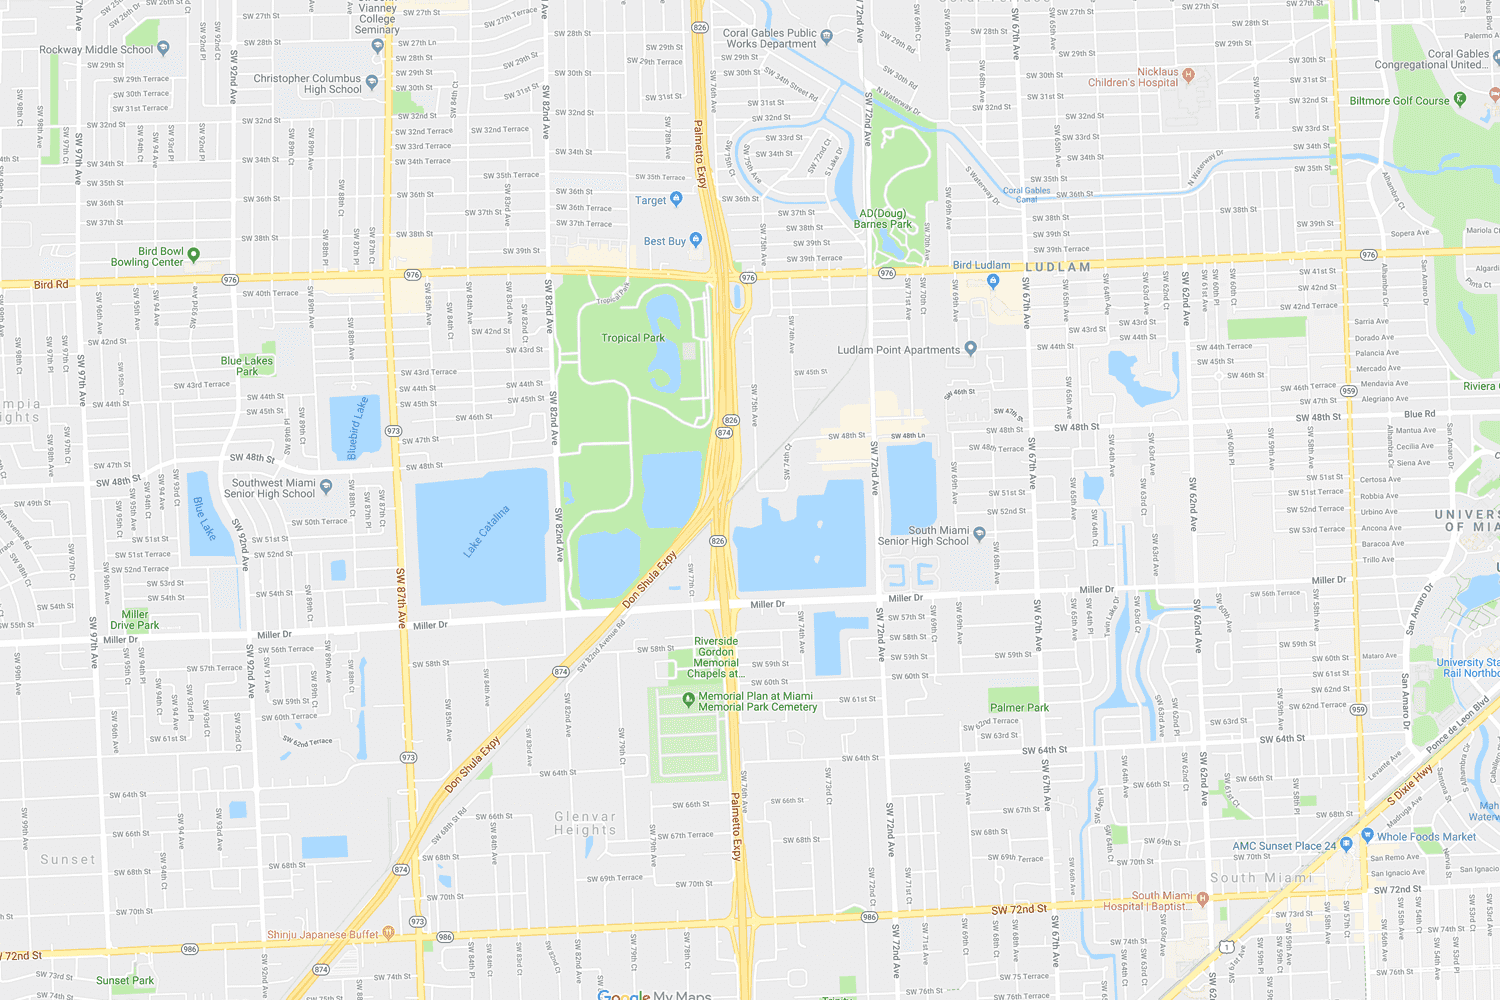 Map of Miami location